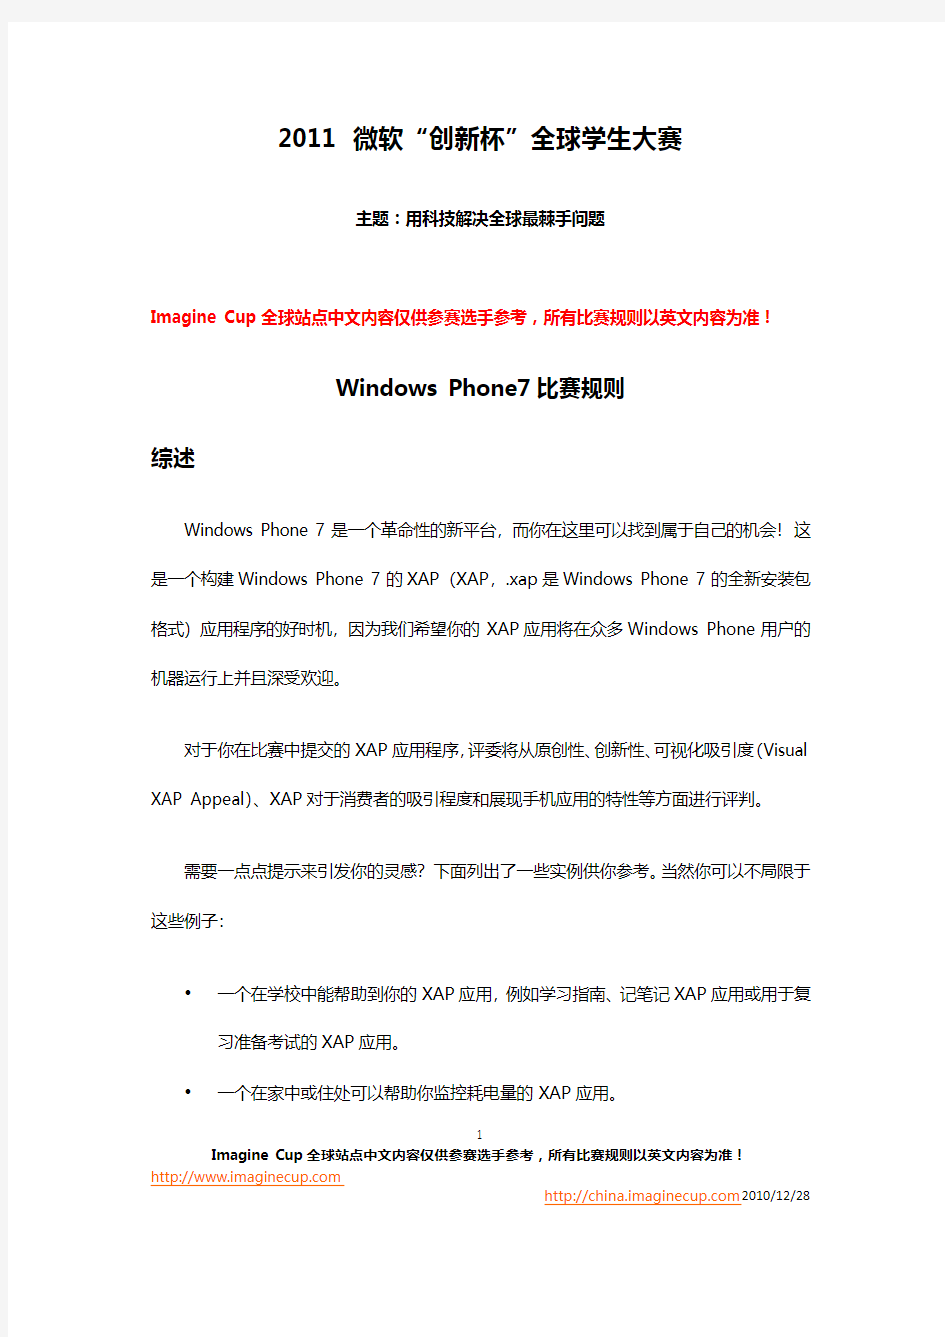 Imagine Cup 2011 Windows Phone7中国区比赛规则